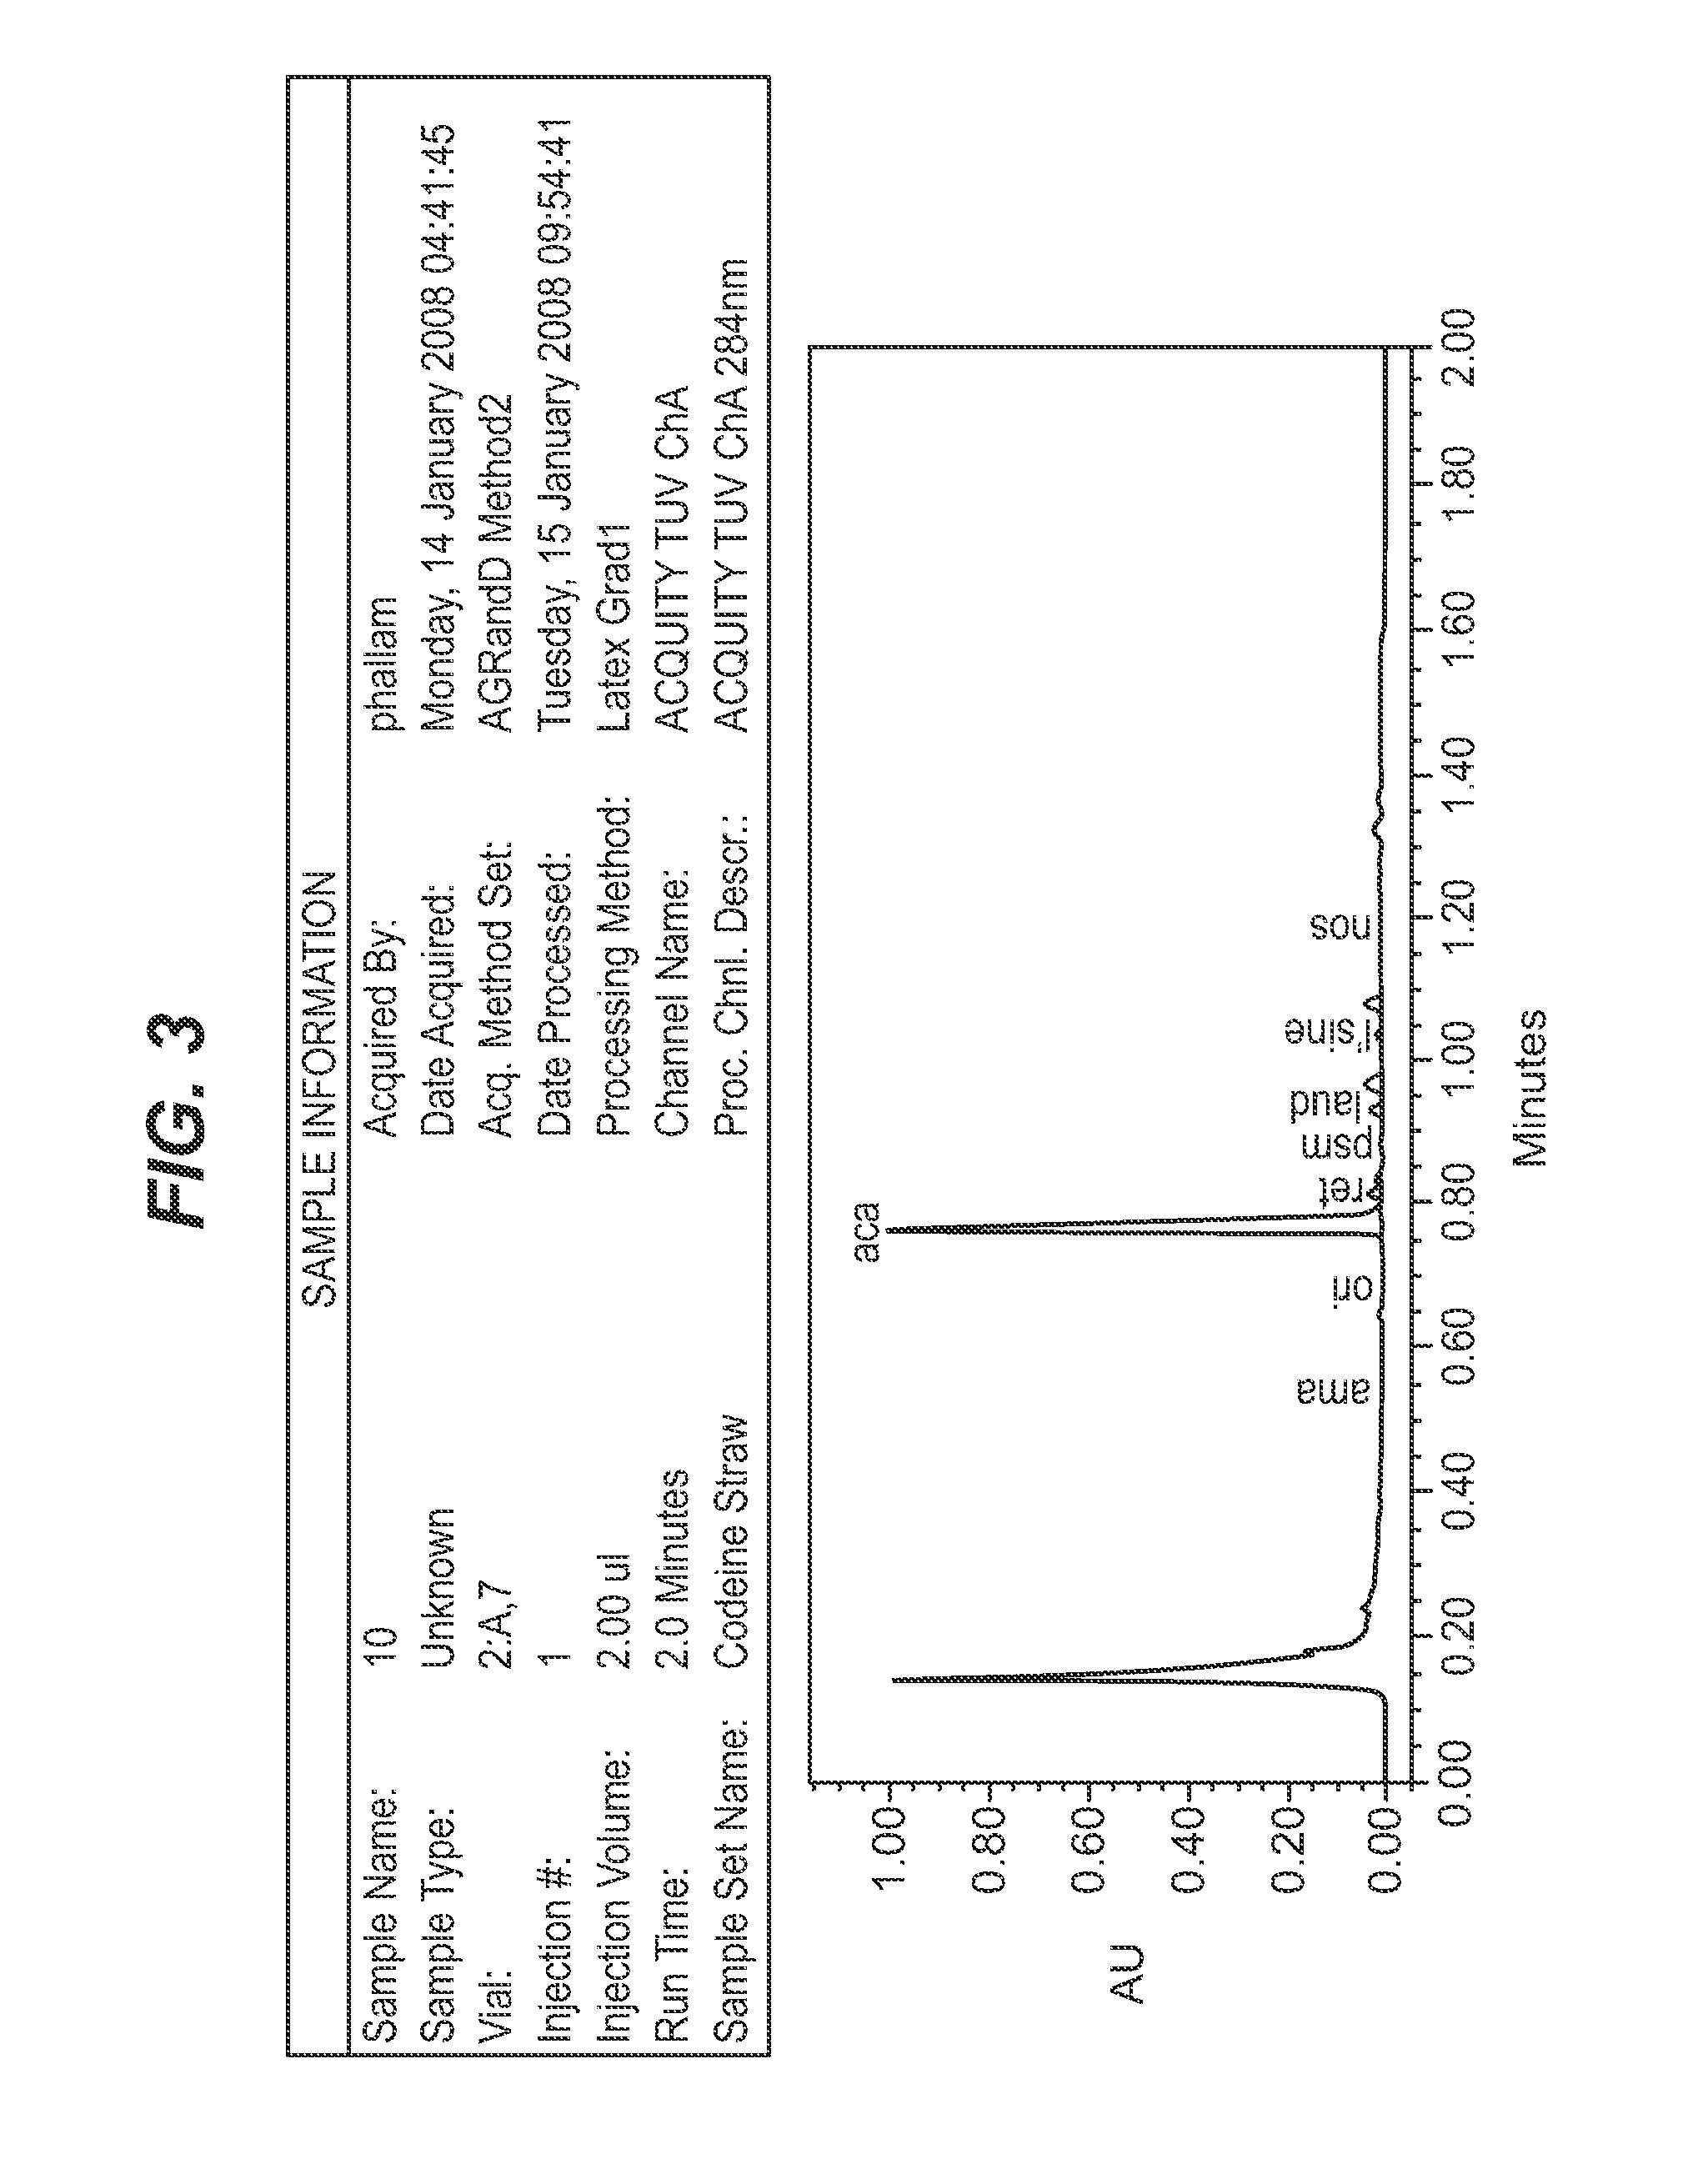 Papaver somniferum with high concentration of codeine